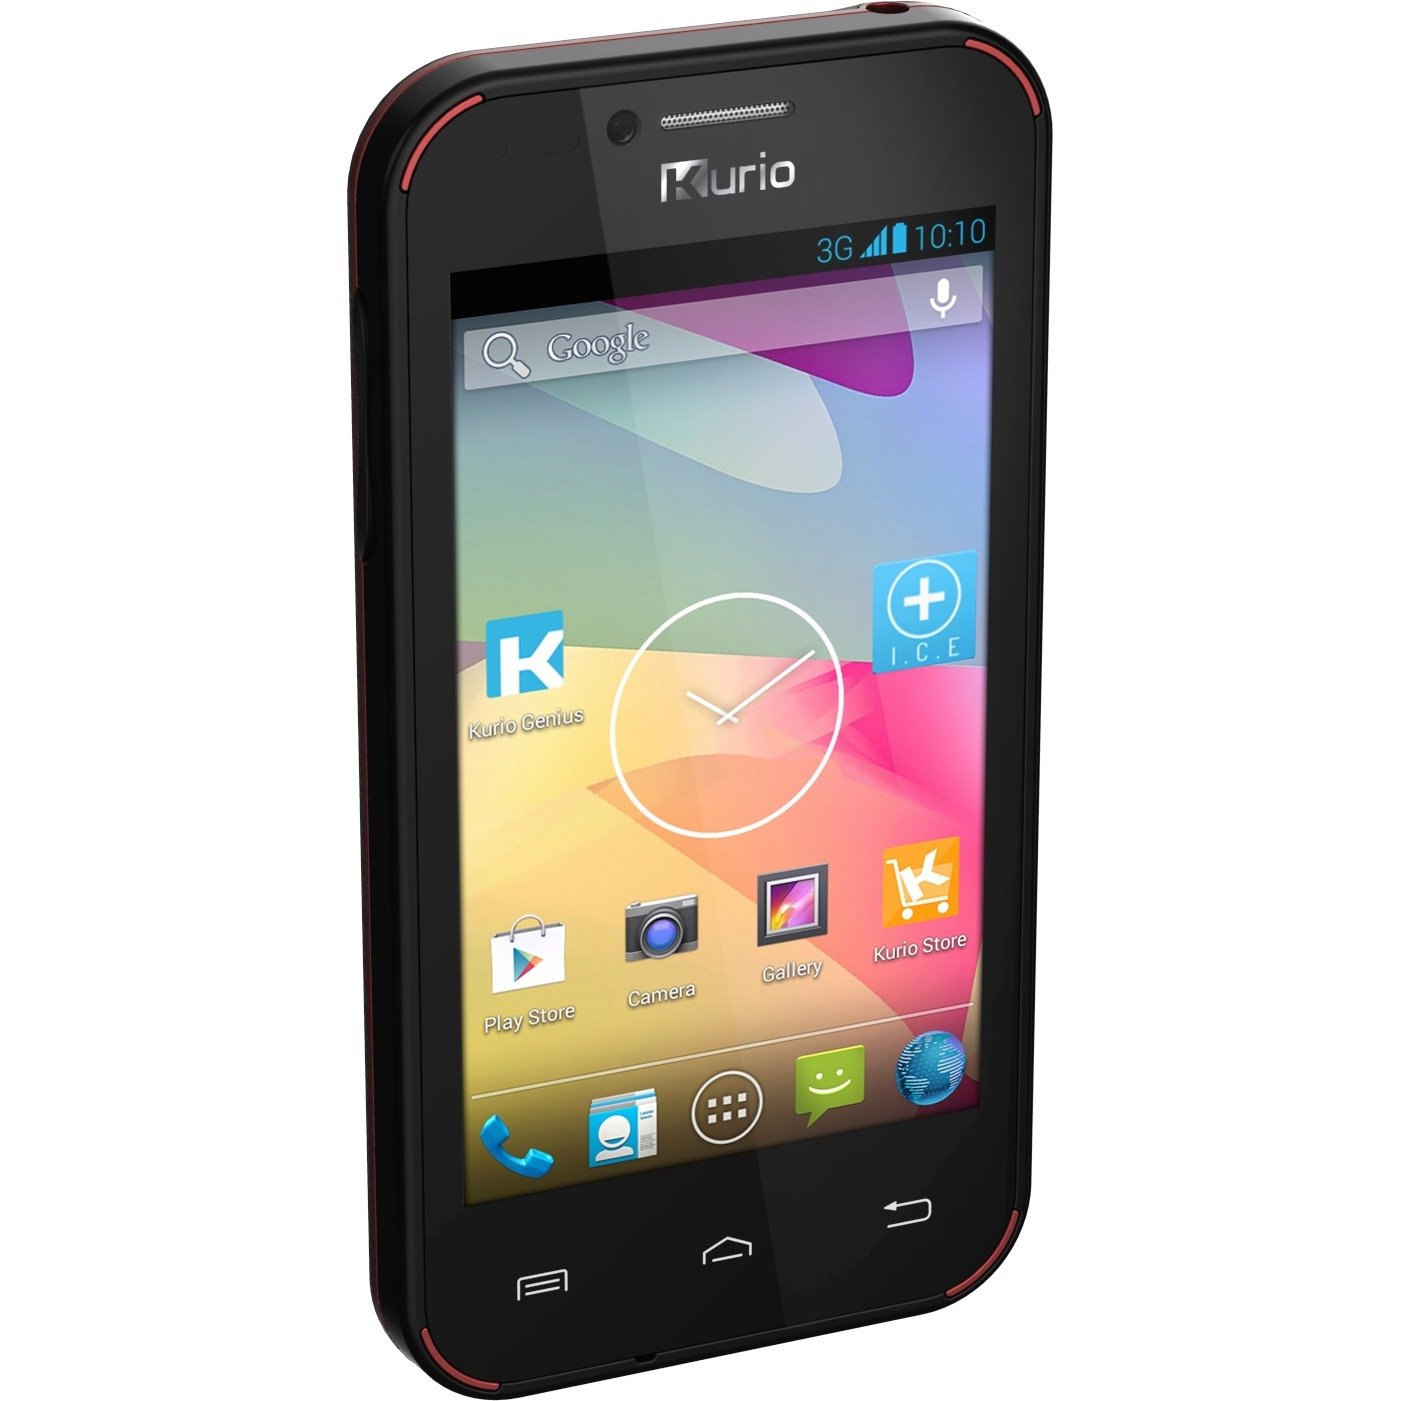 Kurio Android Smartphone for Kids